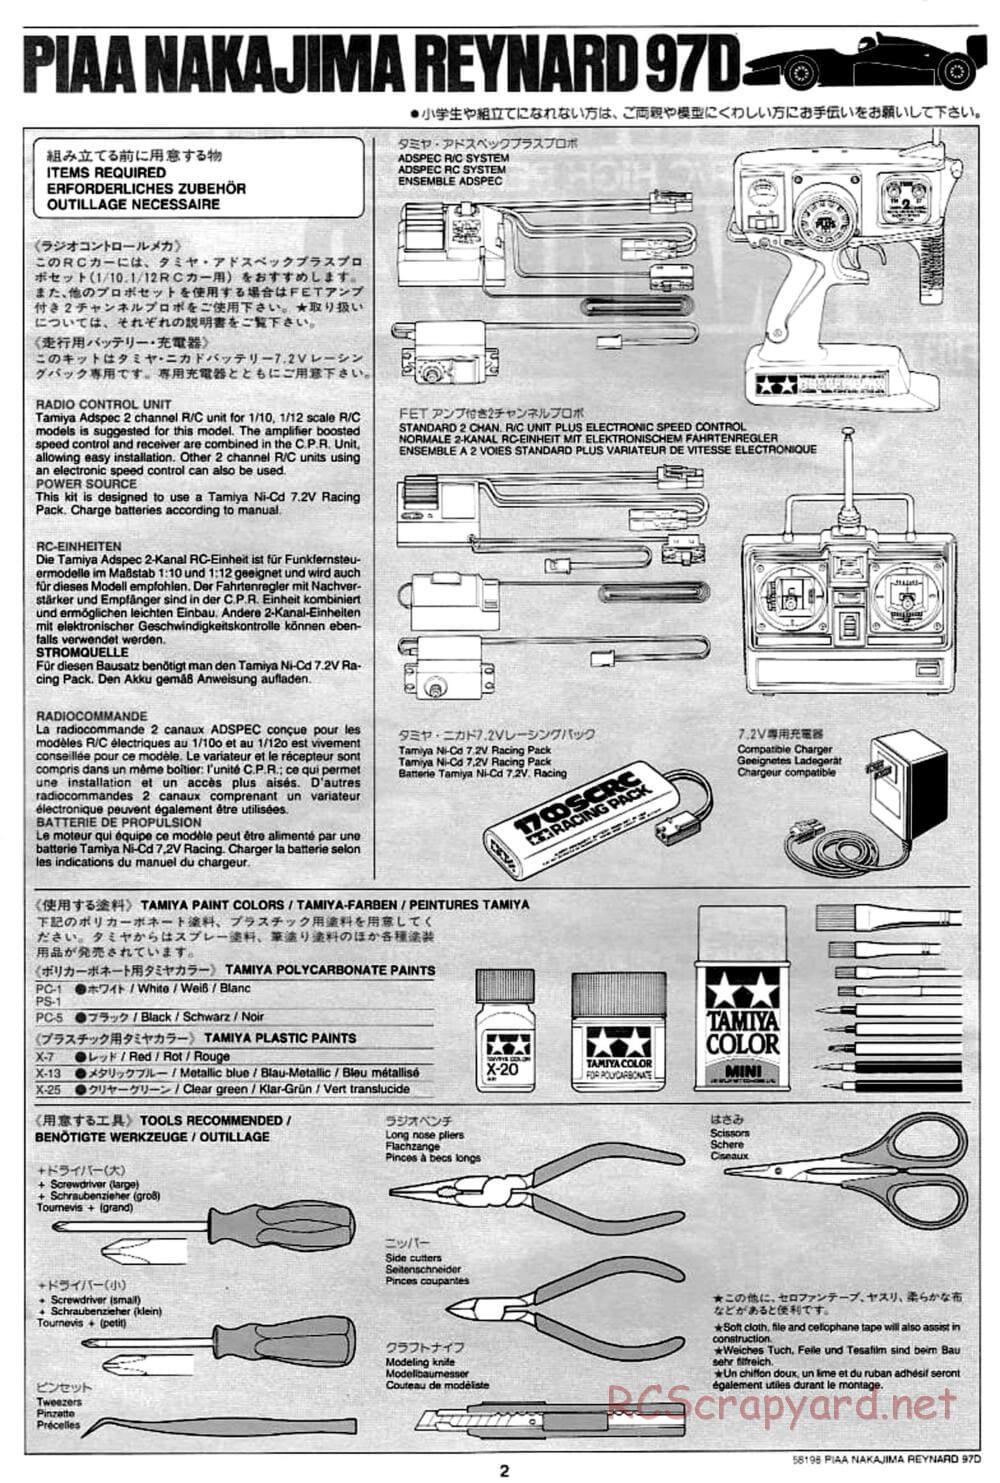 Tamiya - PIAA Nakajima Reynard 97D - F103 Chassis - Manual - Page 2